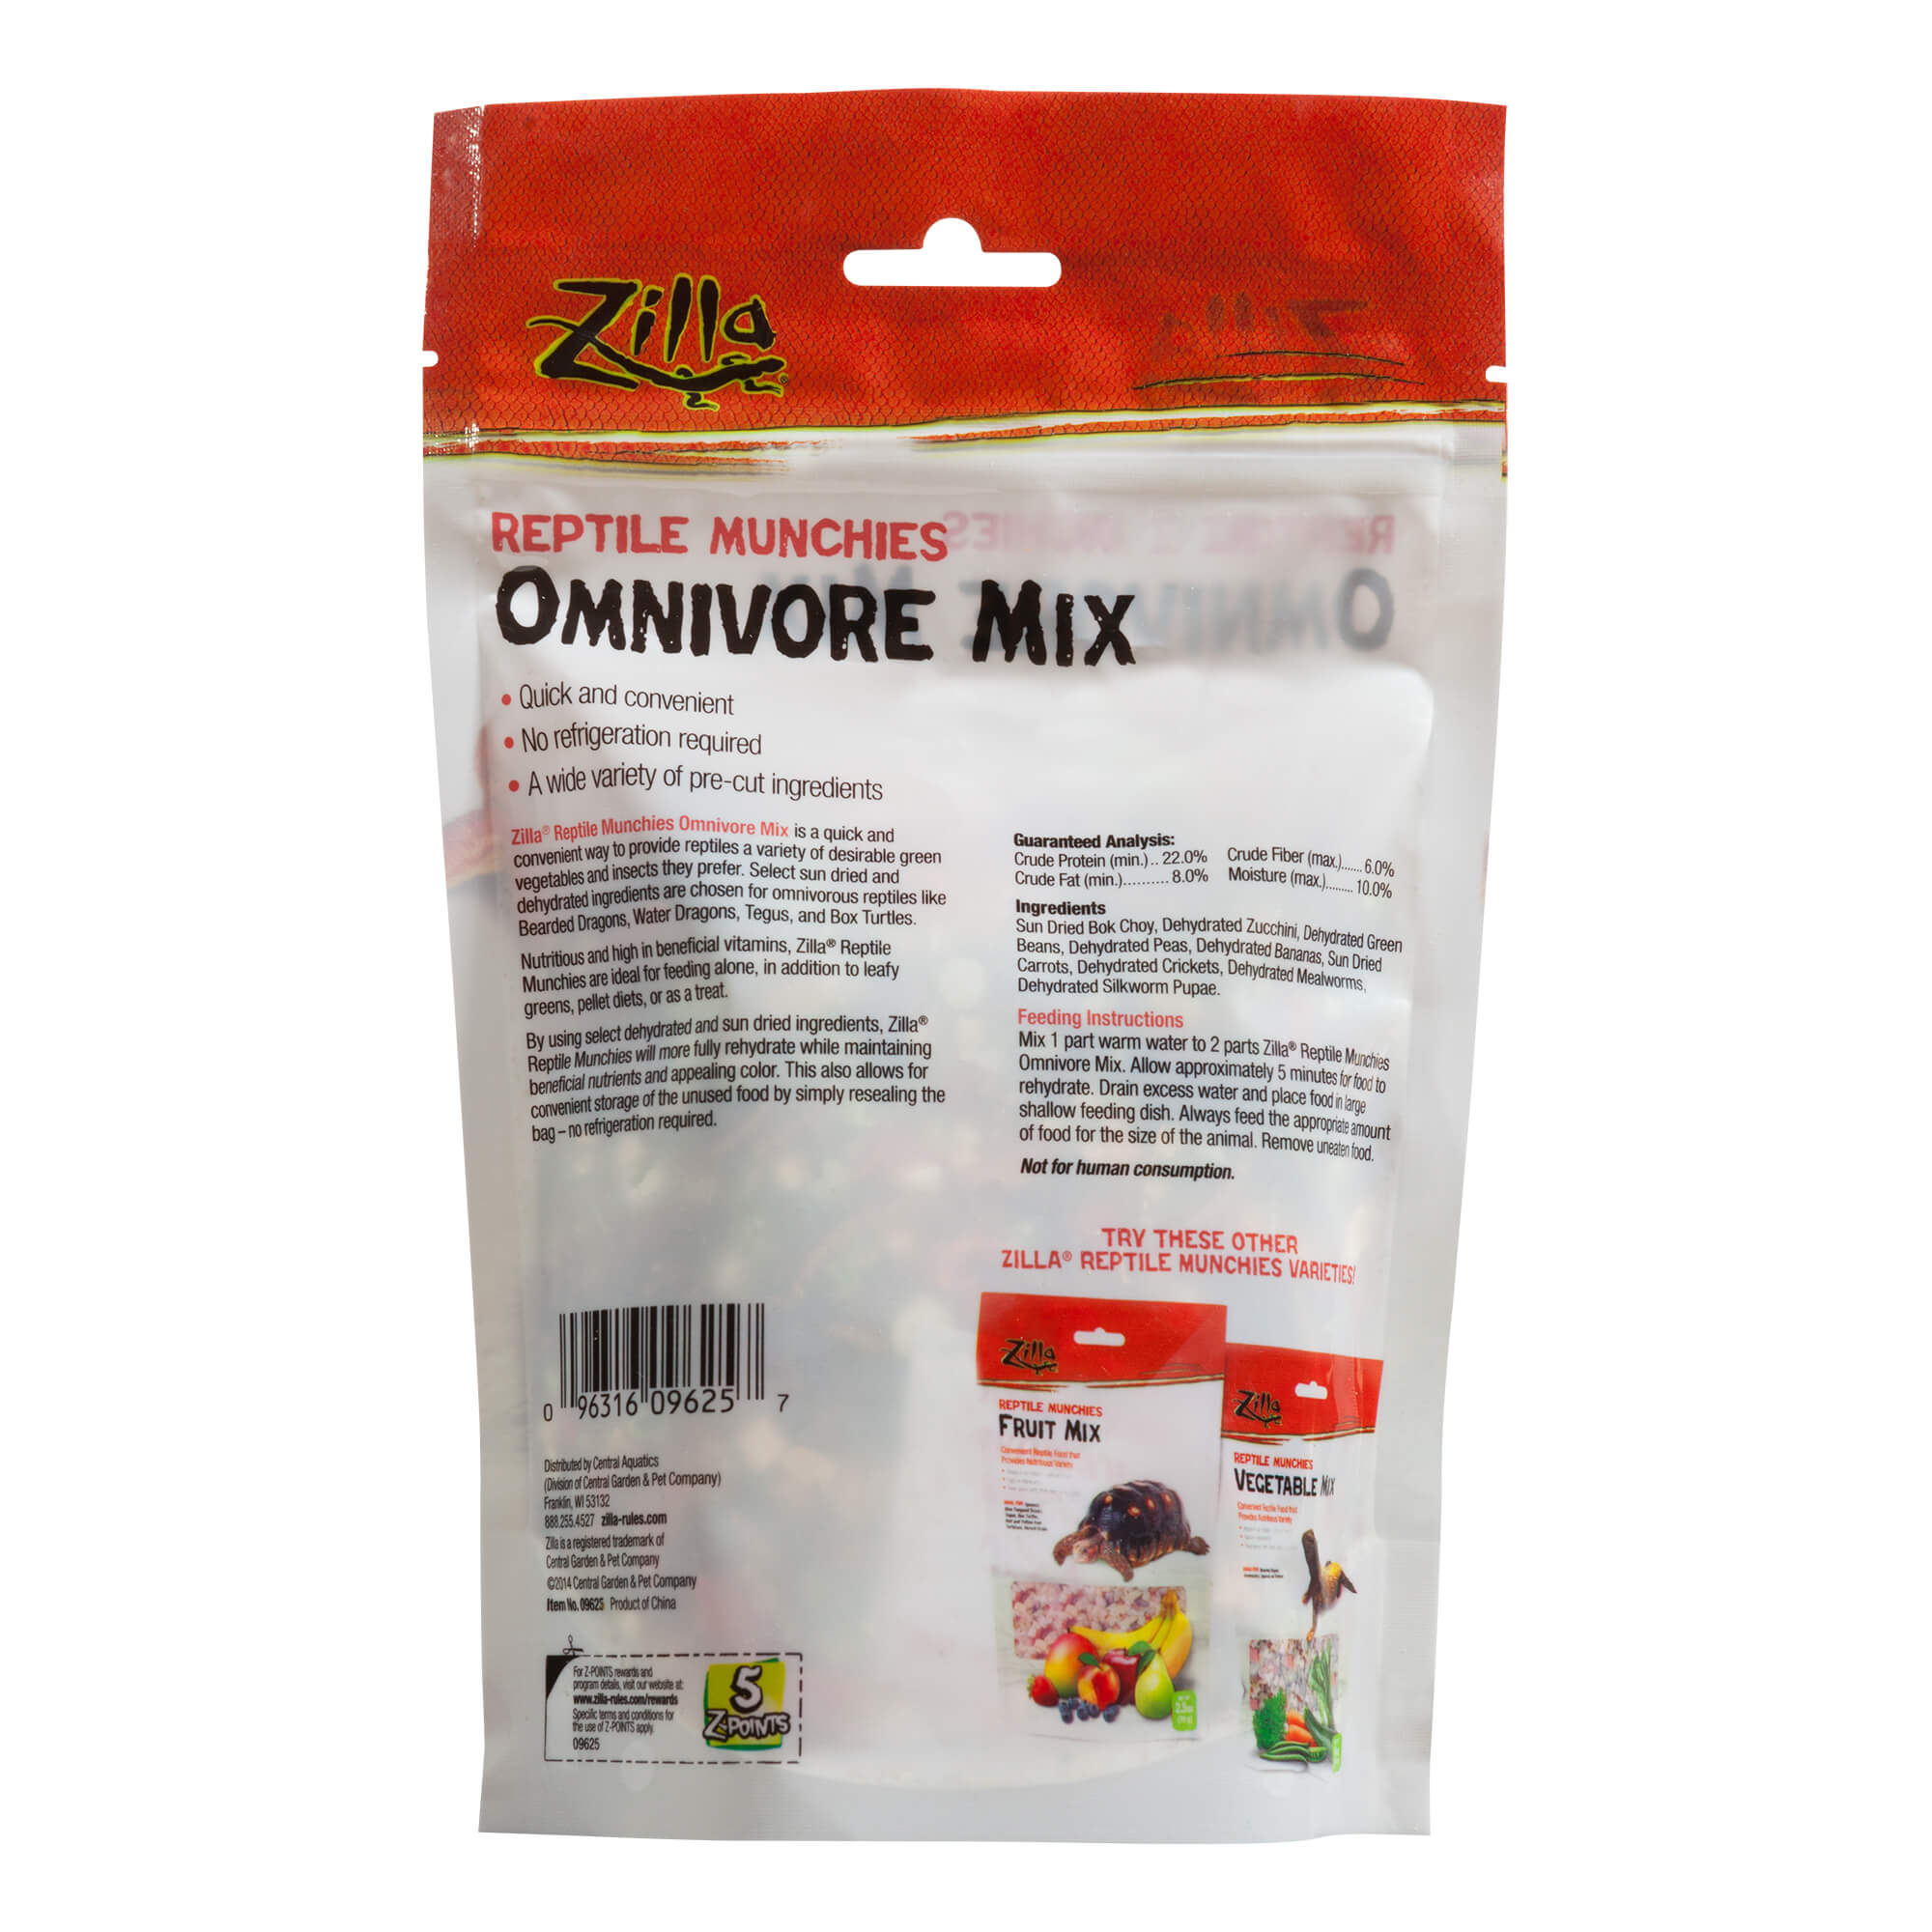 Zilla Omnivore Mix Reptile Munchies Ingredients List